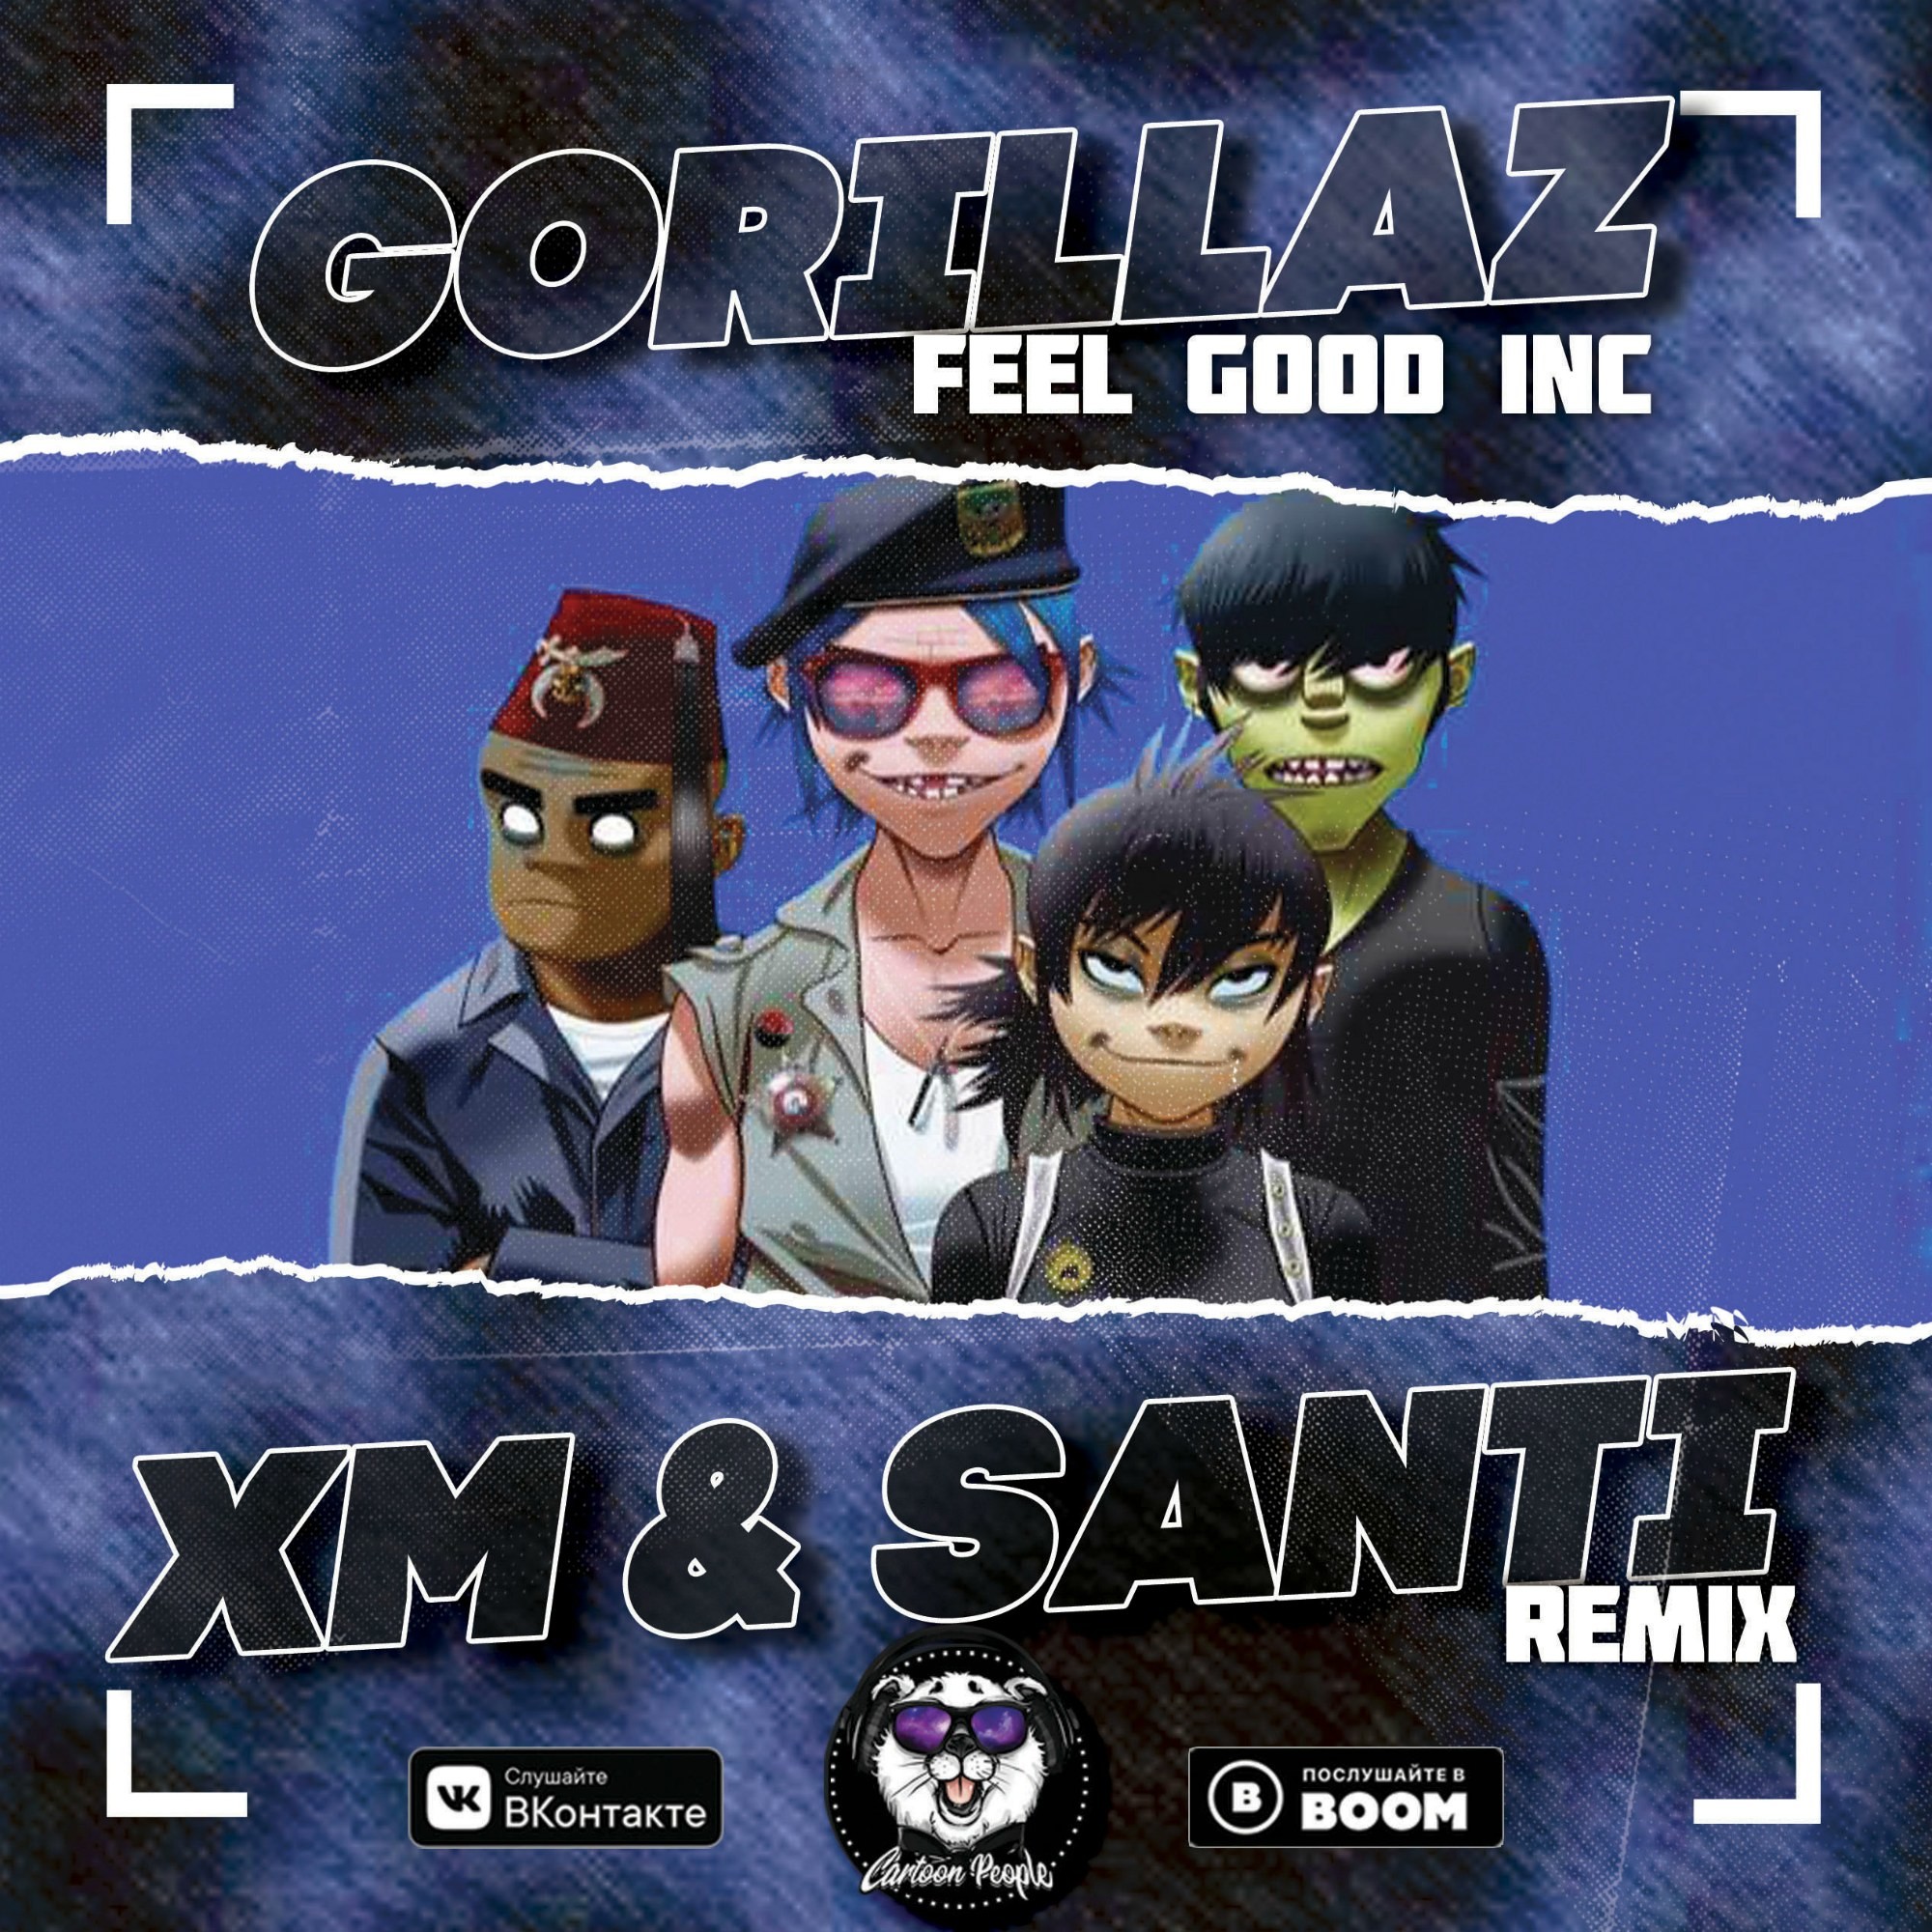 Песня gorillaz feel. Гориллаз Фил. Gorillaz feel good Inc 2005. Гориллаз Фил Гуд. Gorillaz ремикс.